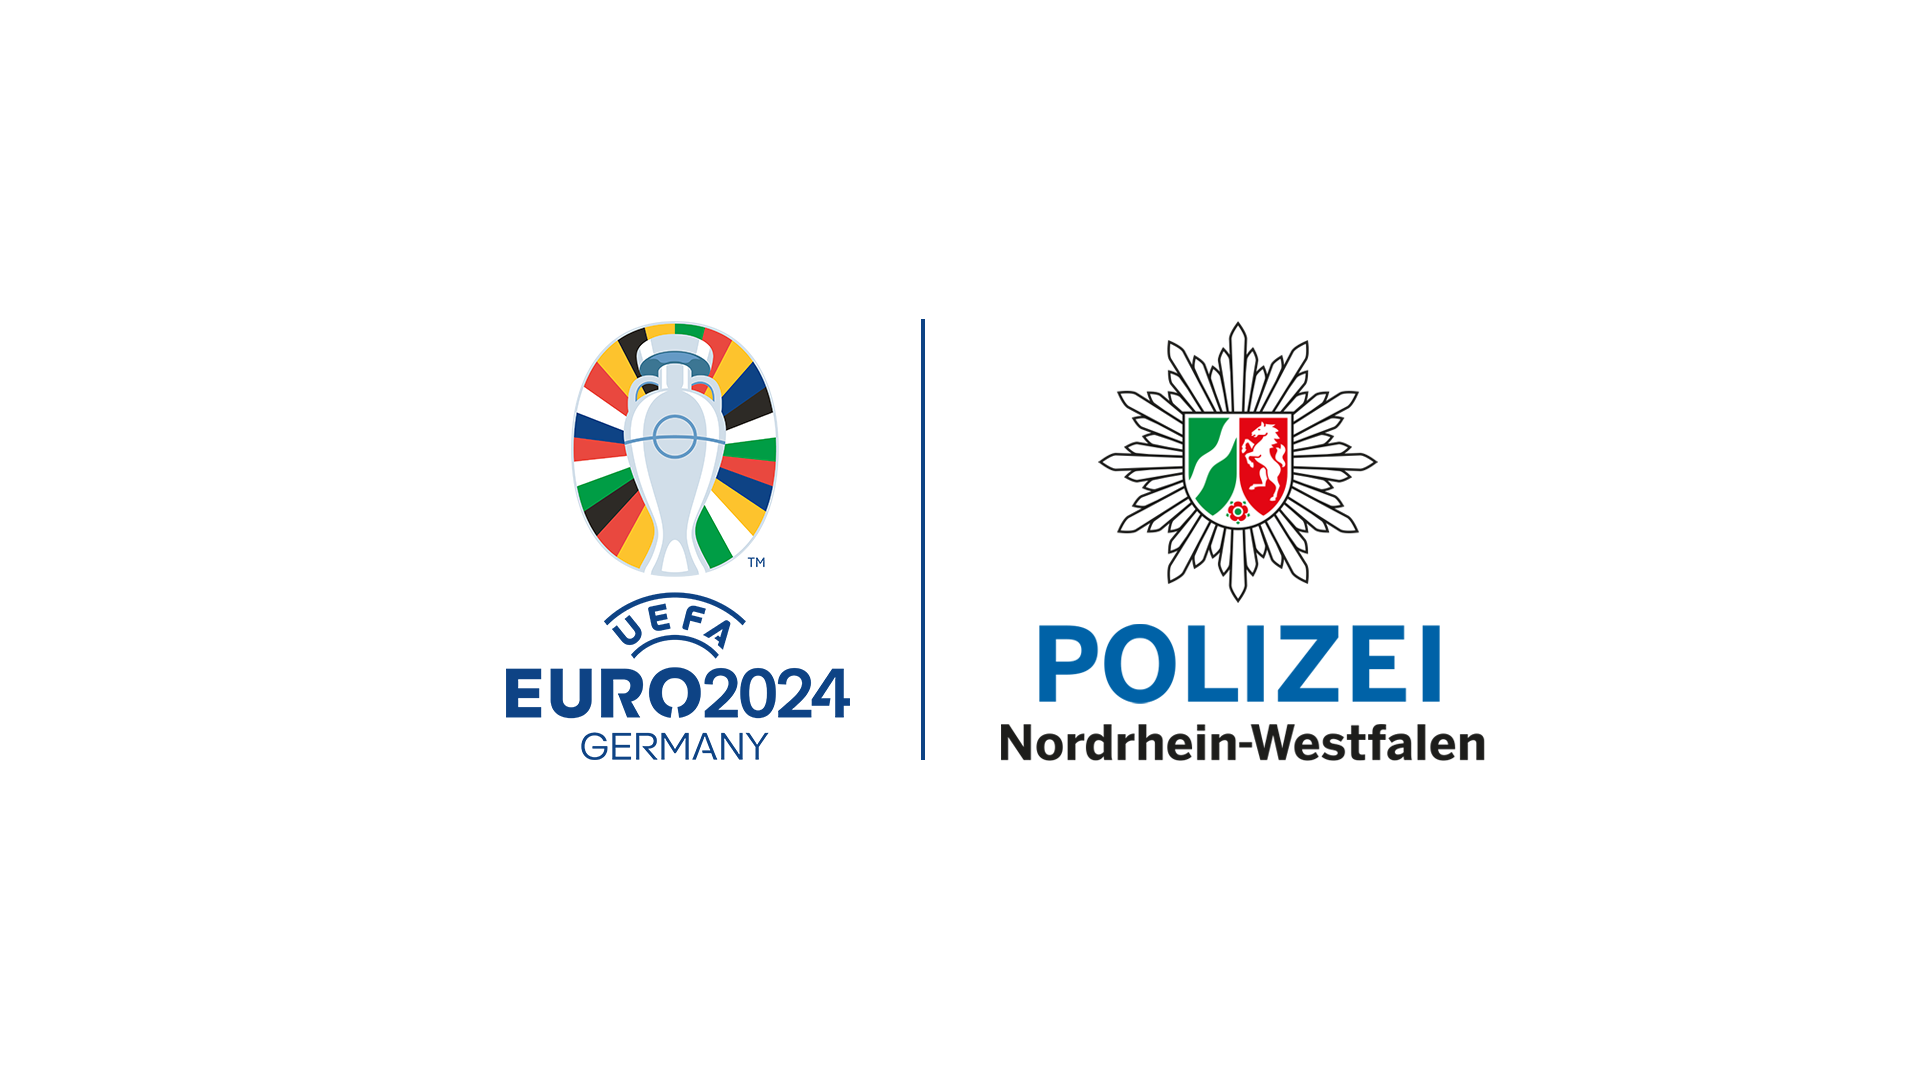 UEFA EURO 2024 tournament logo Composite Polizei NRW